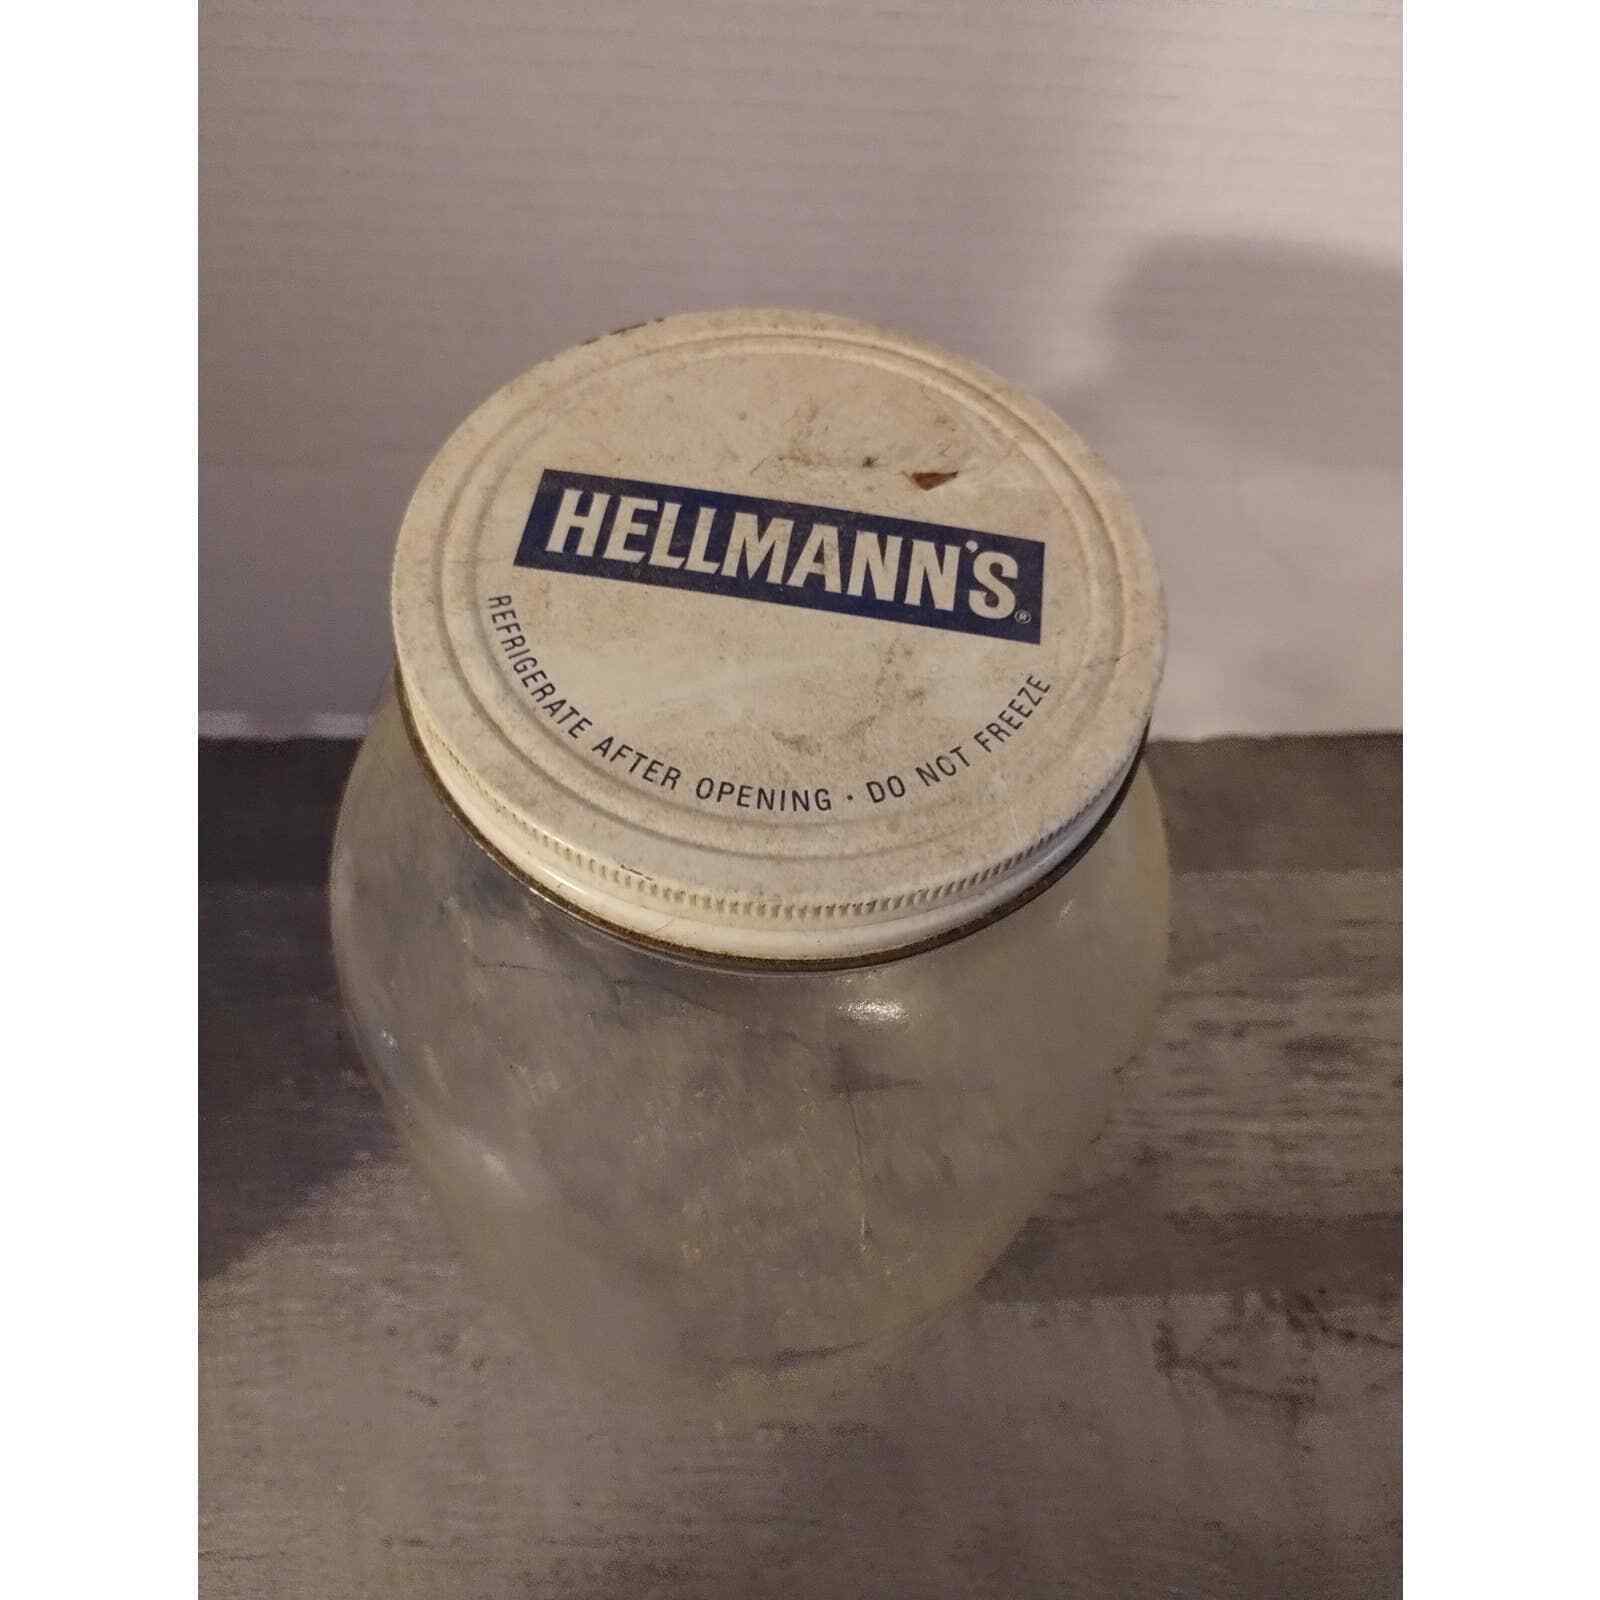 Hellmann's Mini tarro cristal de Mayonesa